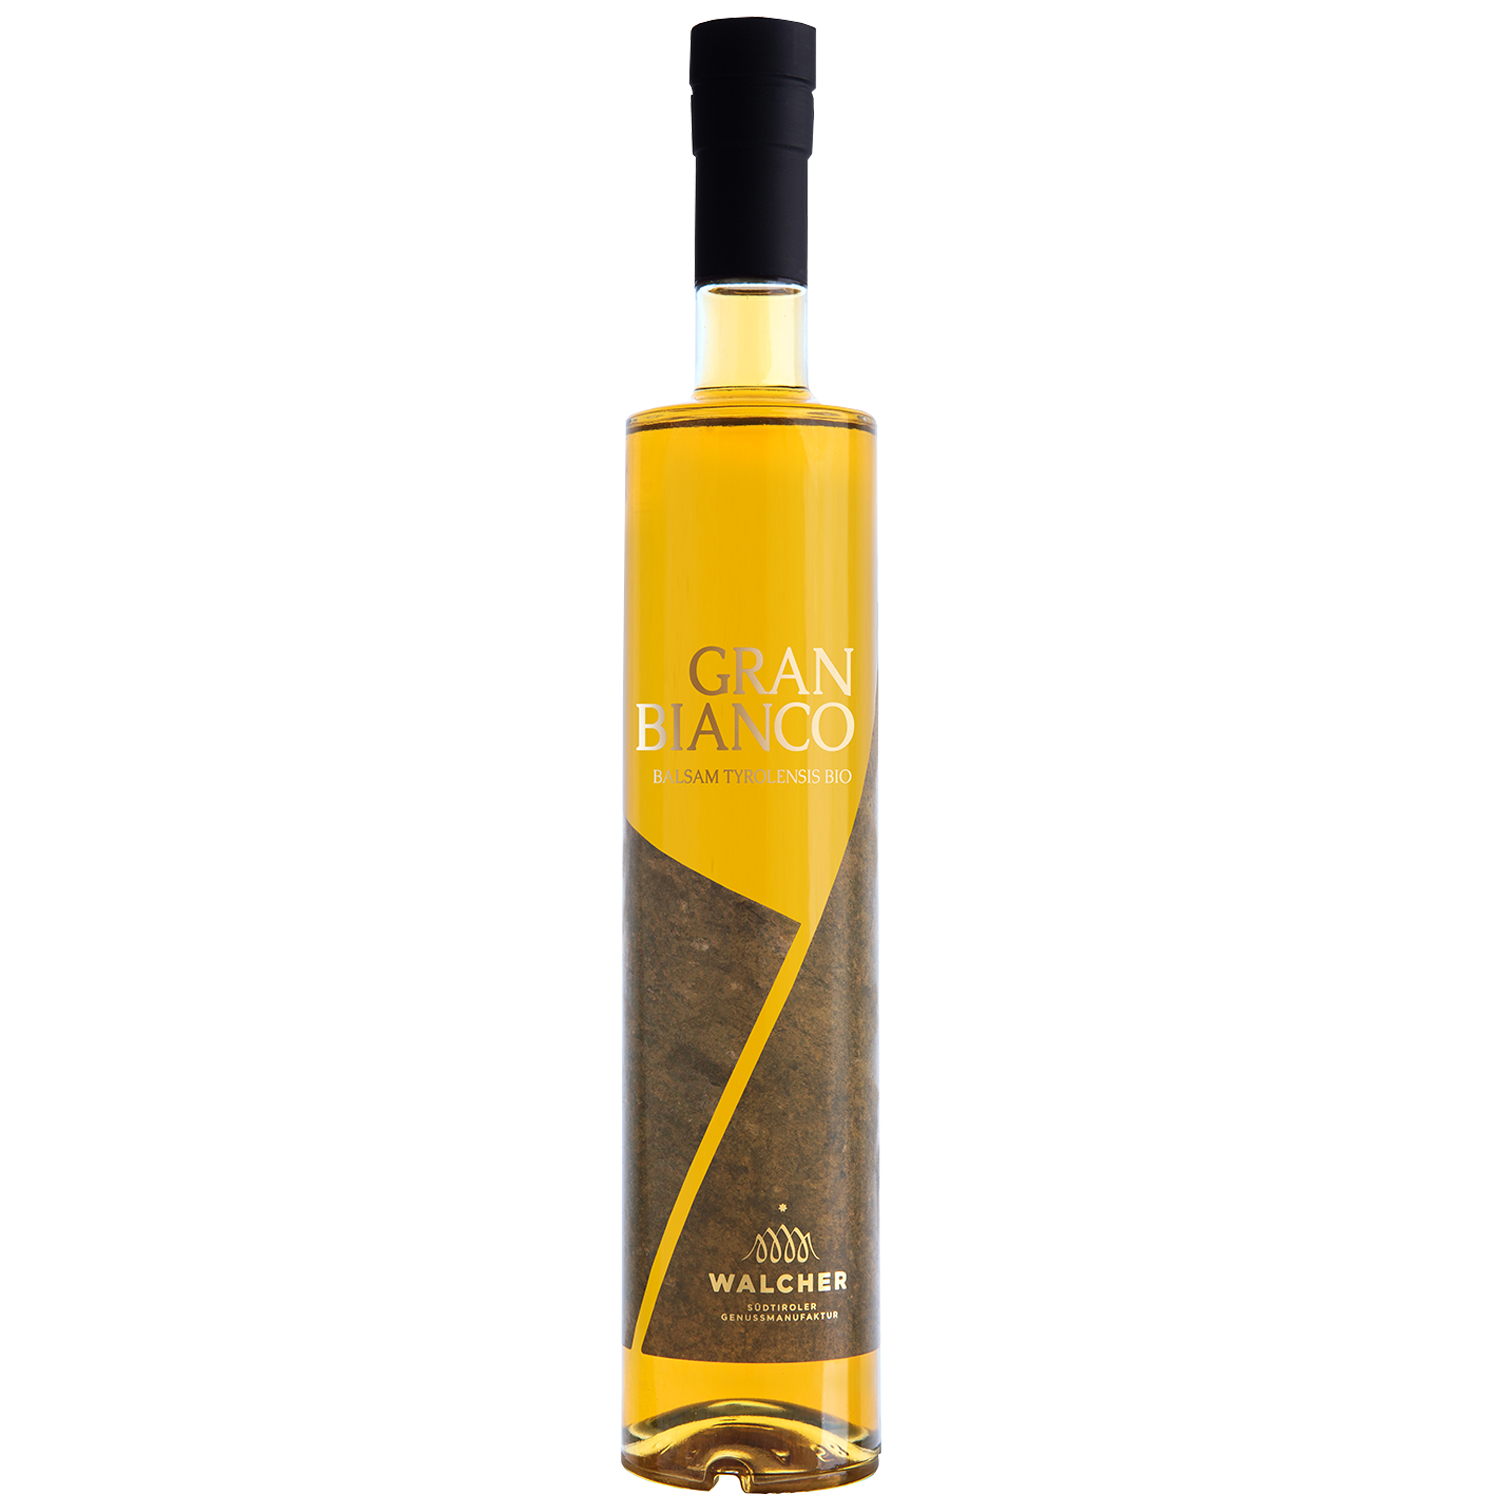 Balsamico Gran Bianco Bio in 500ml bottle by Walcher